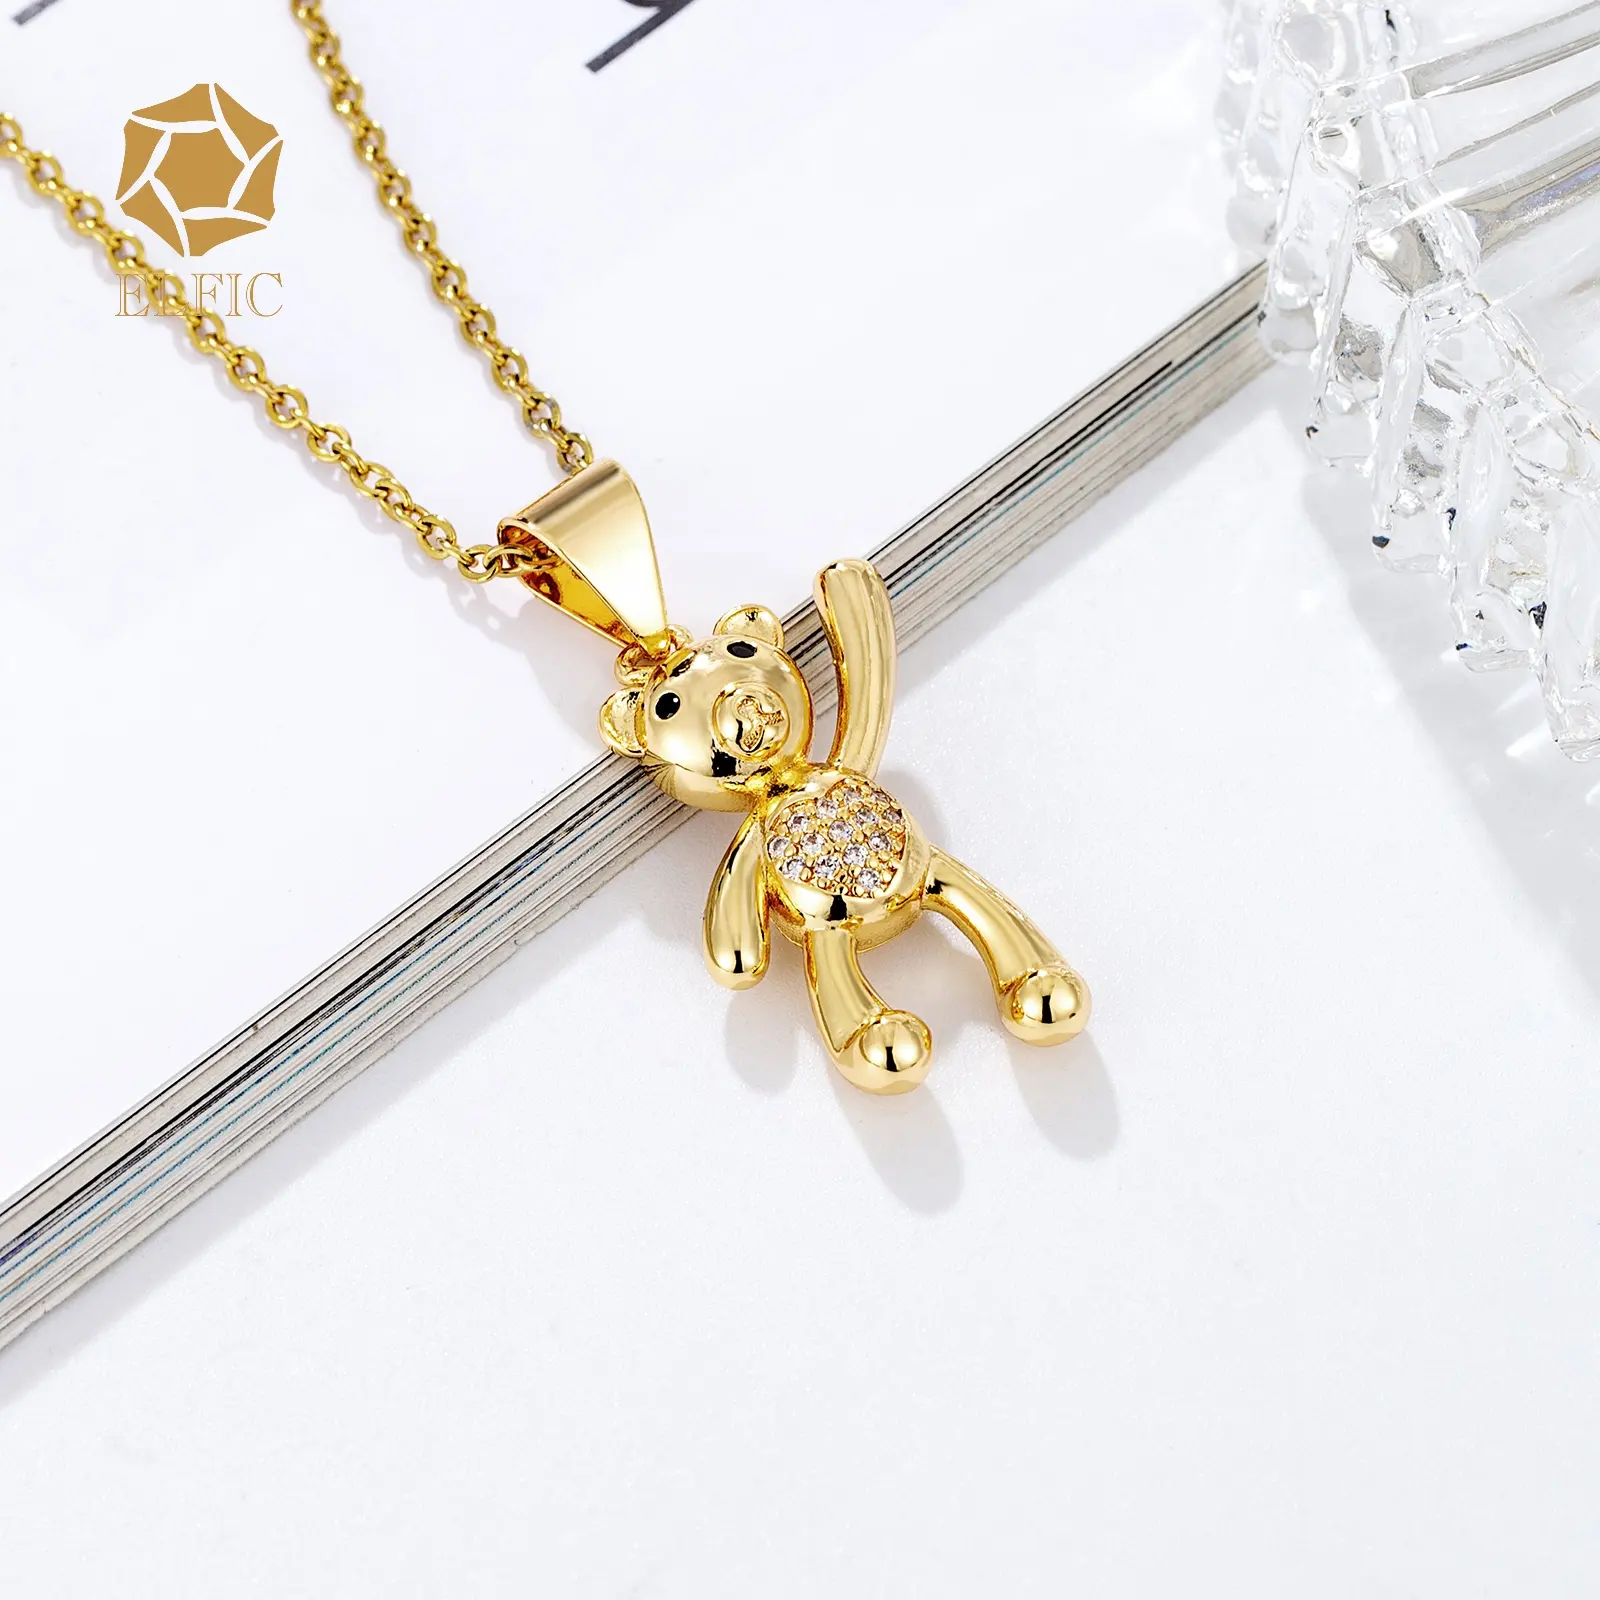 Elfic Animal Charm Pendant Children Gift Gold Plated Bear Pendants Moon Initial Necklace Oro laminado 18k Jewelry for Unicorn